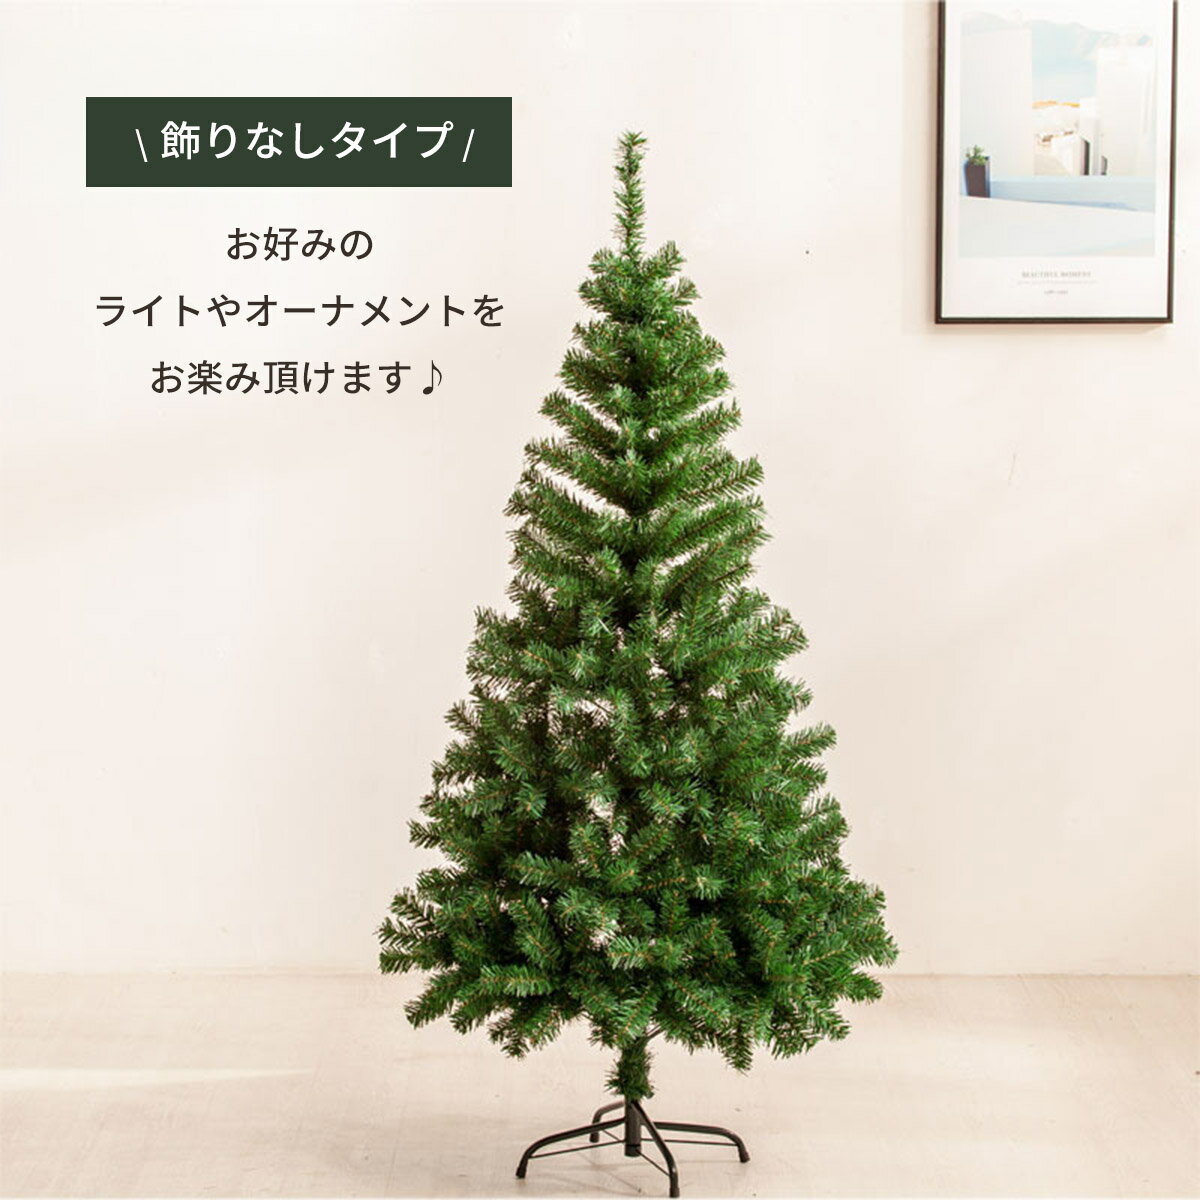 [180cm] VeroMan クリスマスツリー グリーン もみの木 ヌードツリー 北欧 おしゃれ クリスマスデコレーション ツリー 単品 飾りなし 2